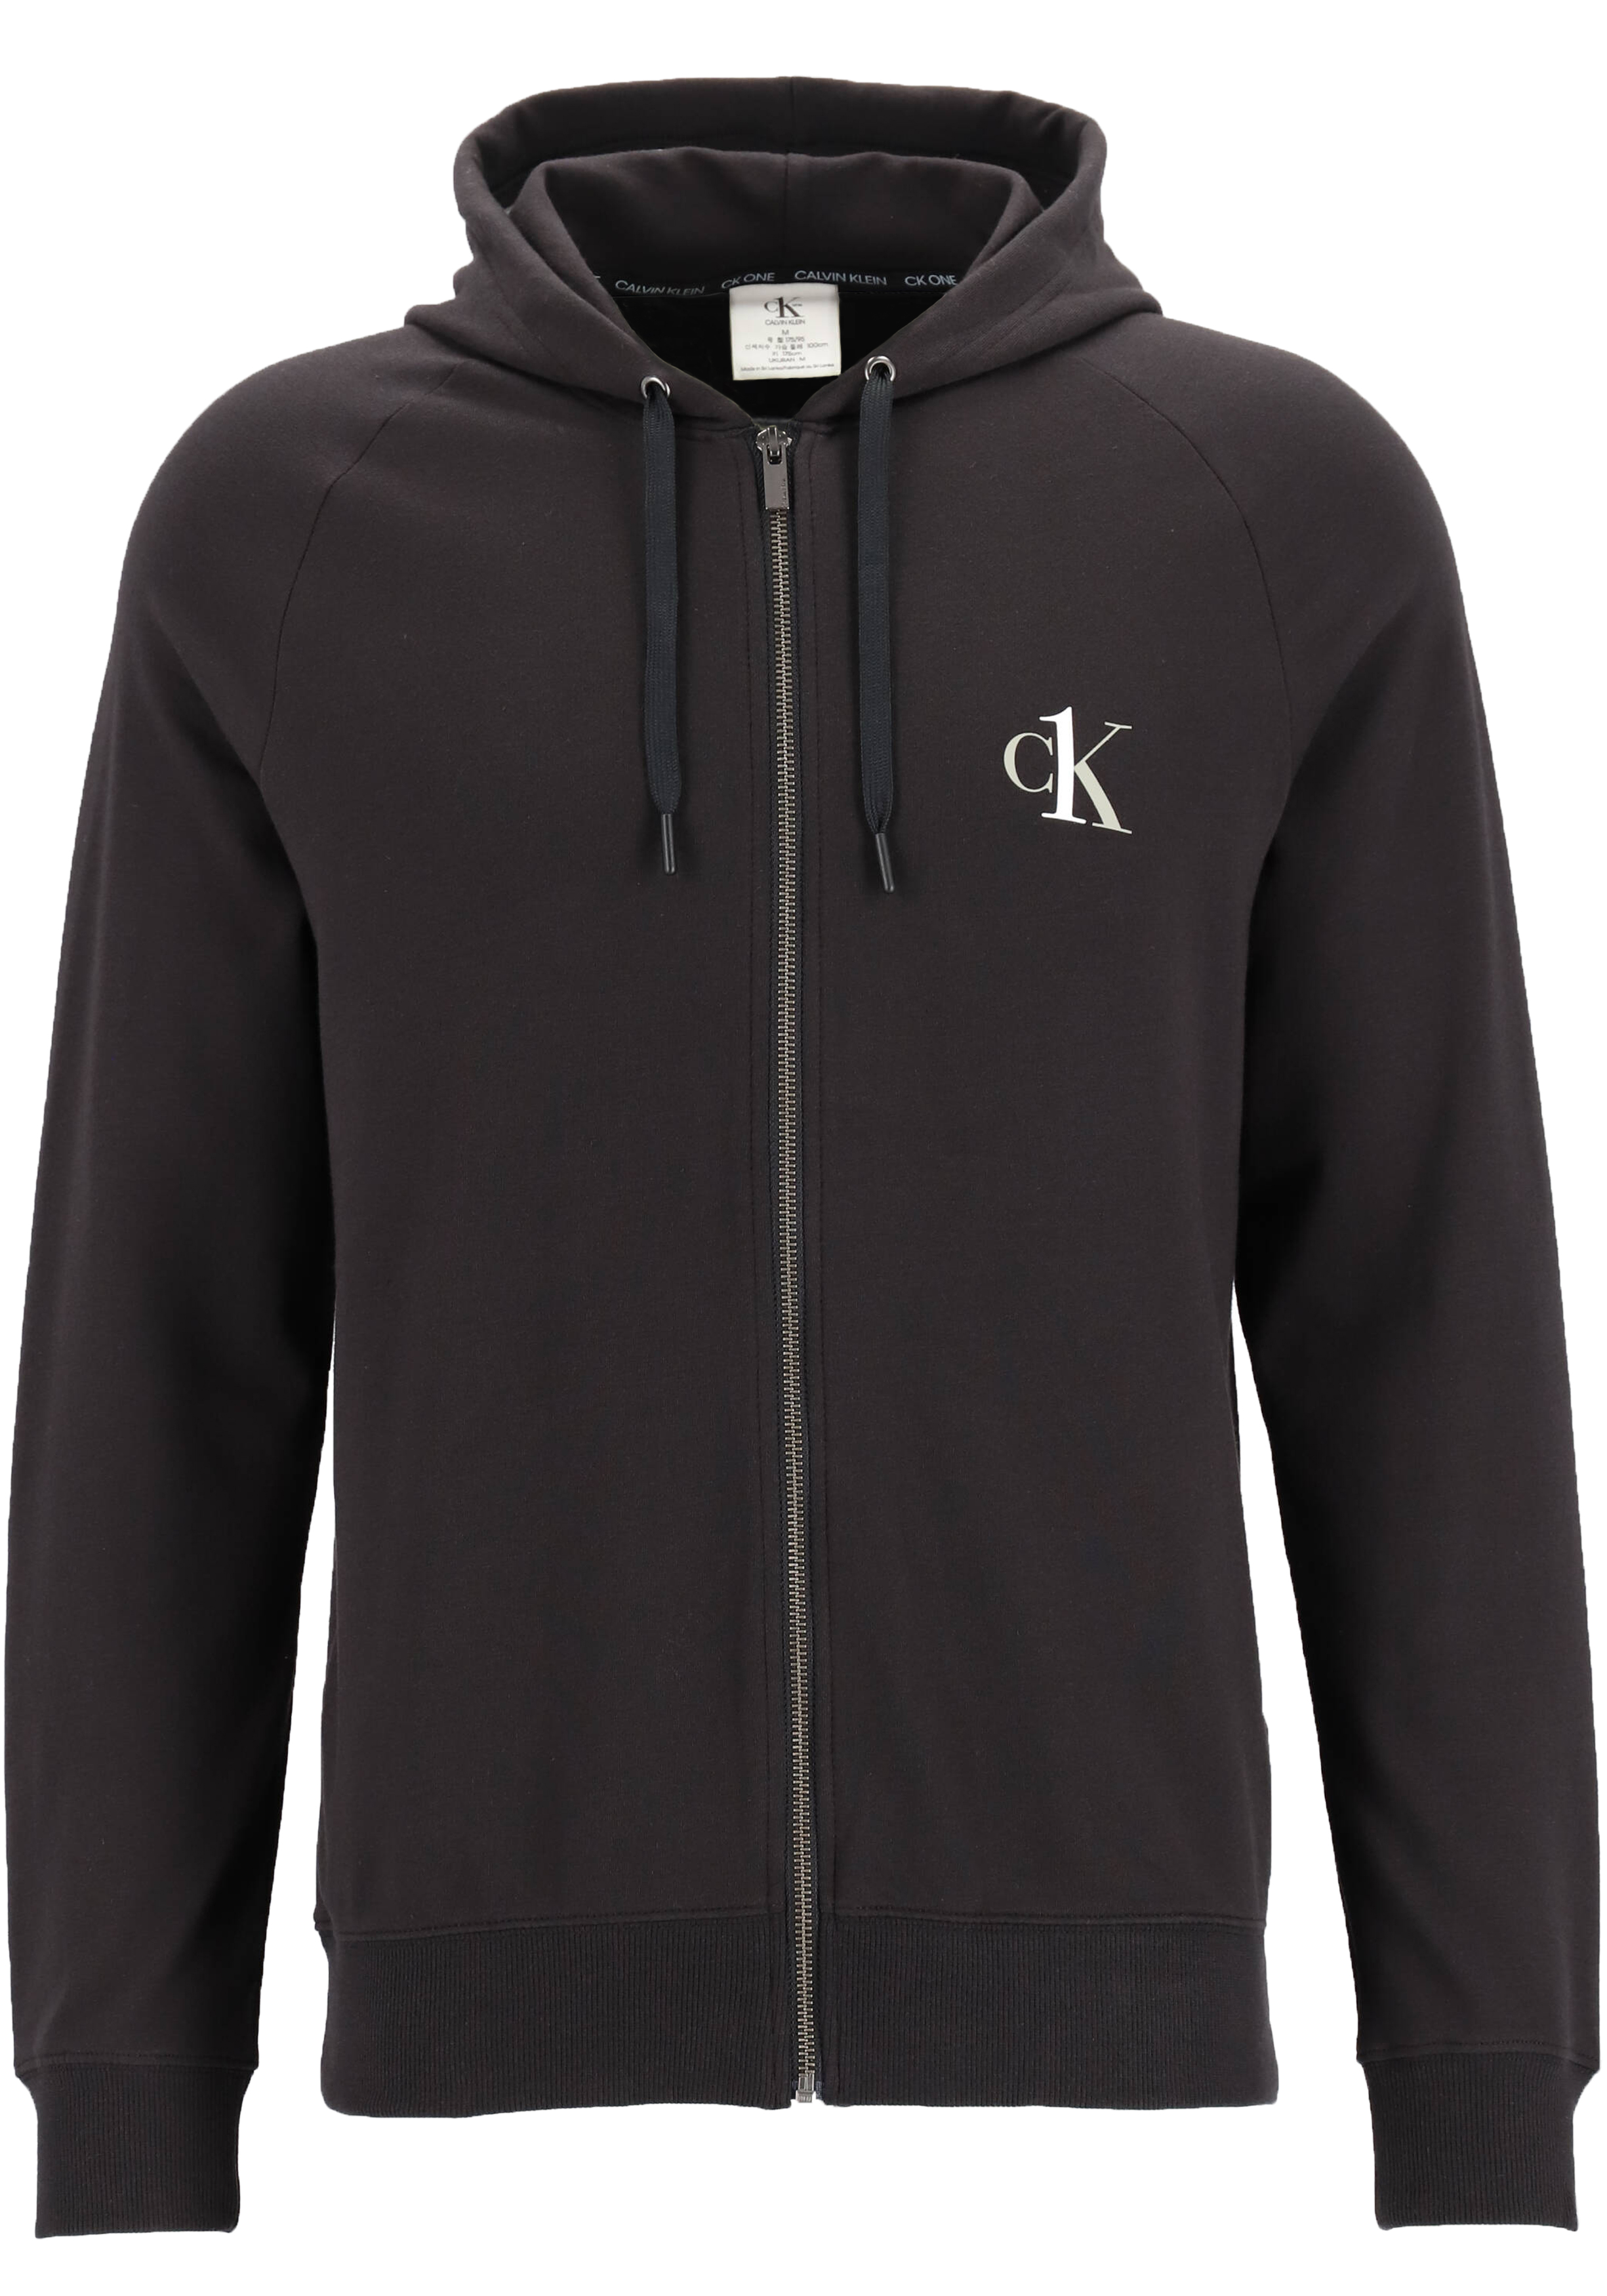 beddengoed Geletterdheid Gepolijst Calvin Klein CK ONE lounge hoodie, heren sweatvest met rits en capuchon,...  - Zomer SALE tot 50% korting